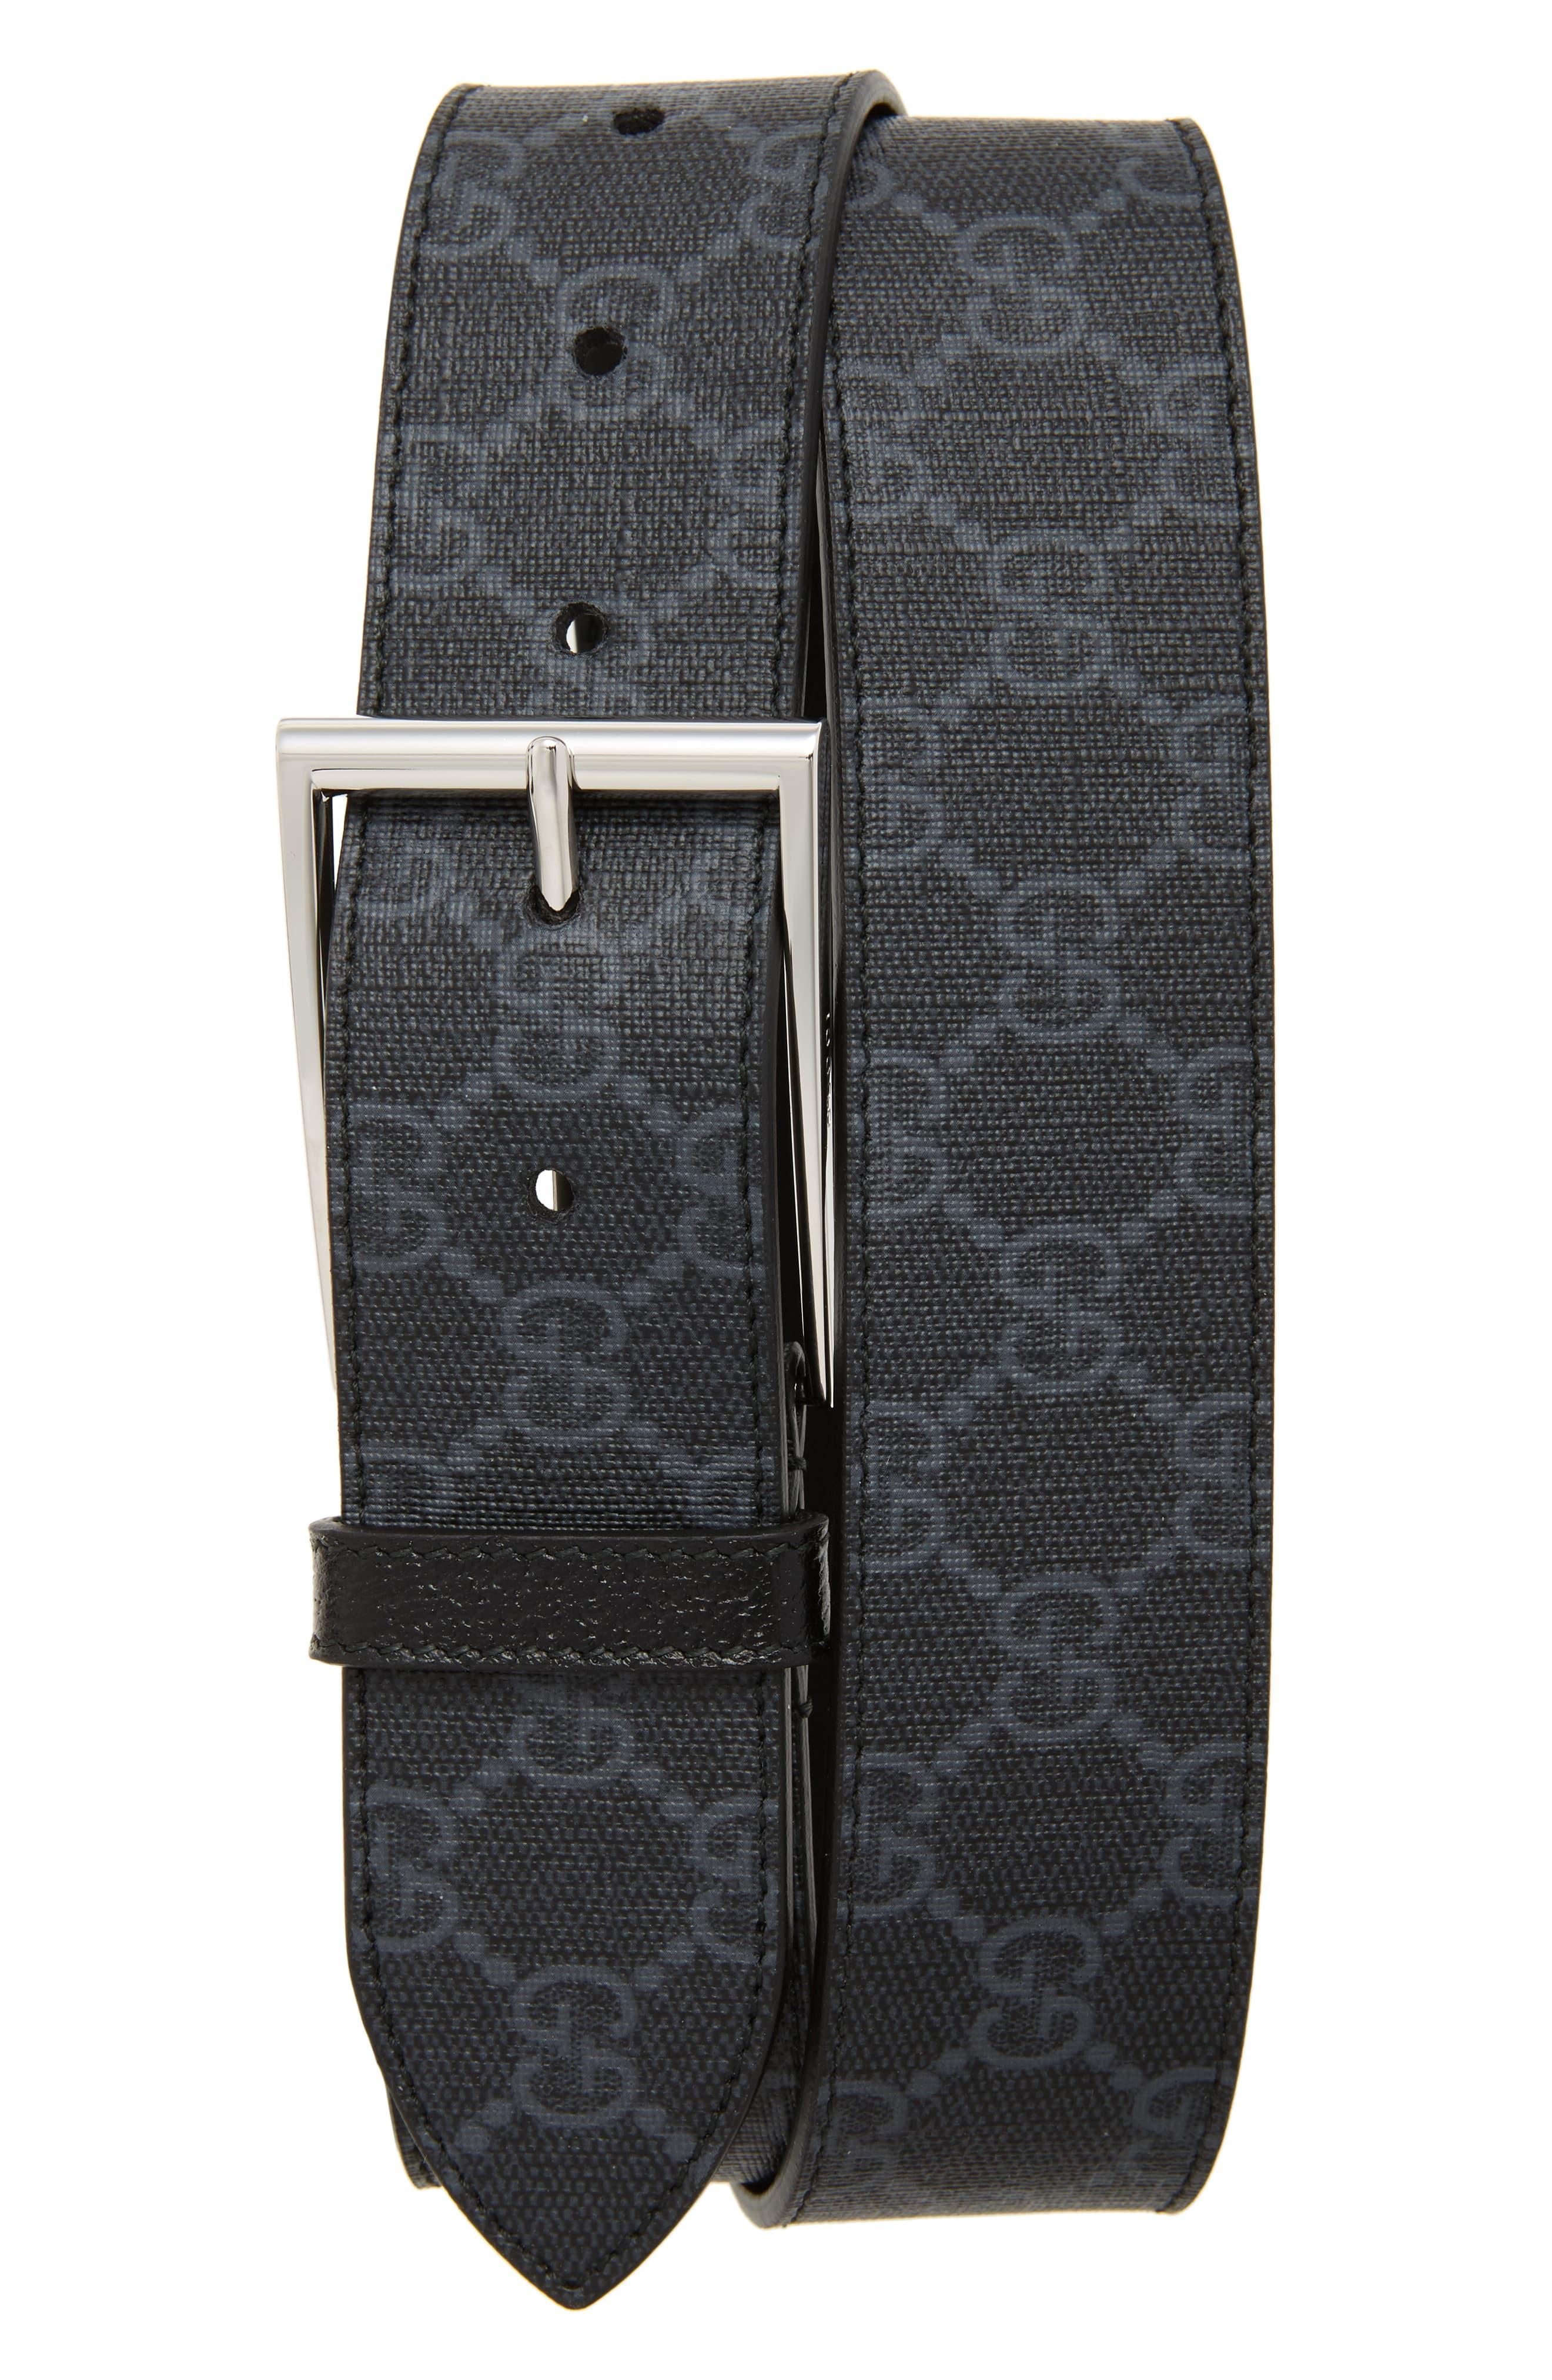 Gucci Gg Supreme Print Canvas Belt in Black for Men - Lyst